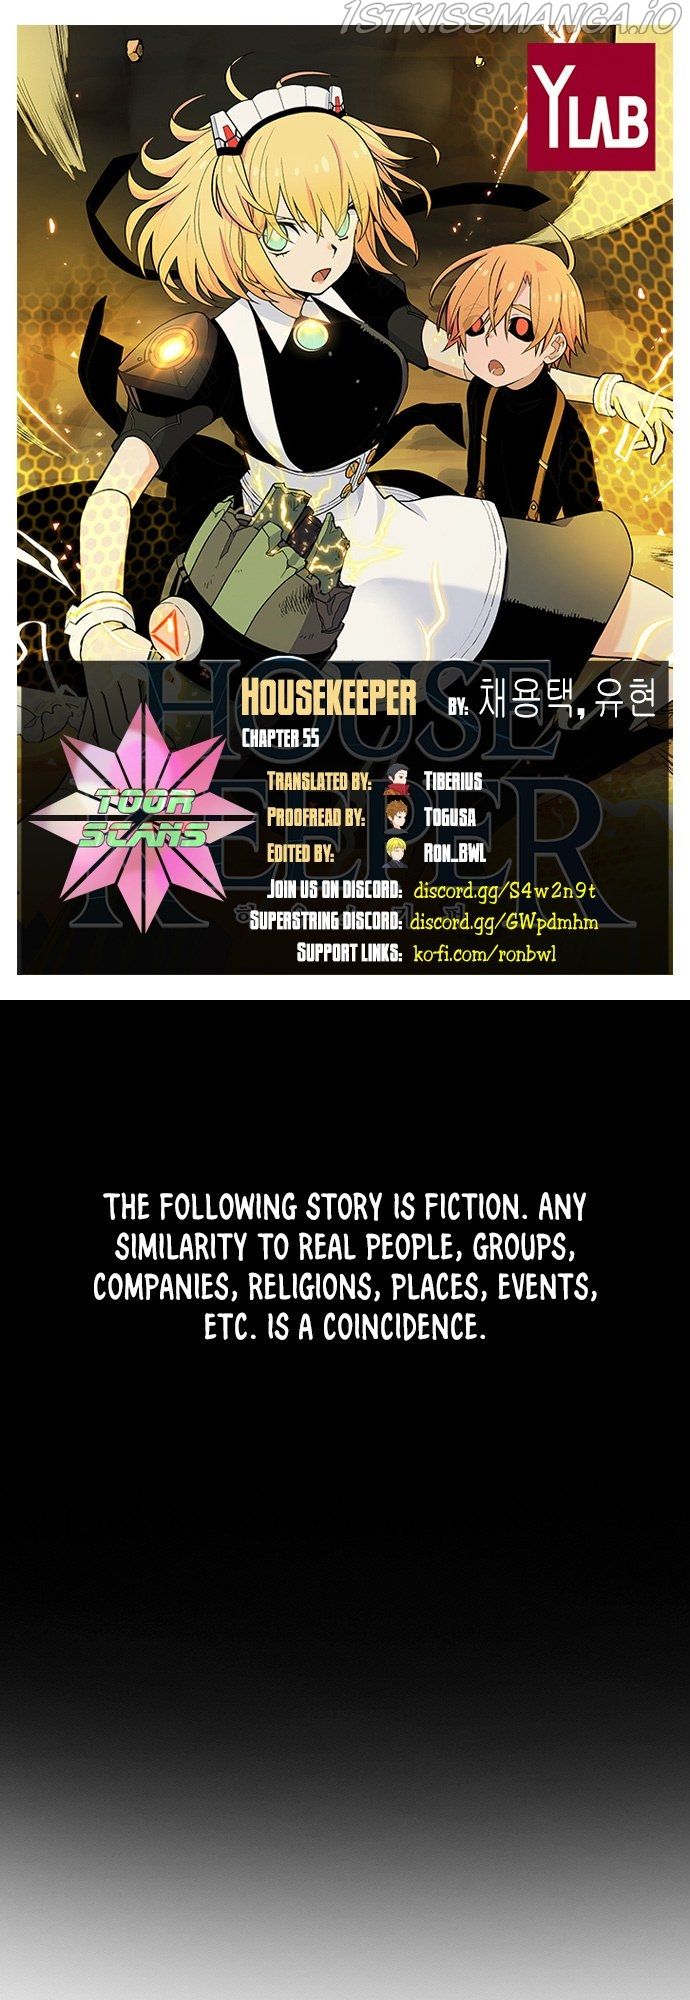 Housekeeper (Chae Yong-Taek) Chapter 55 page 1 - MangaWeebs.in